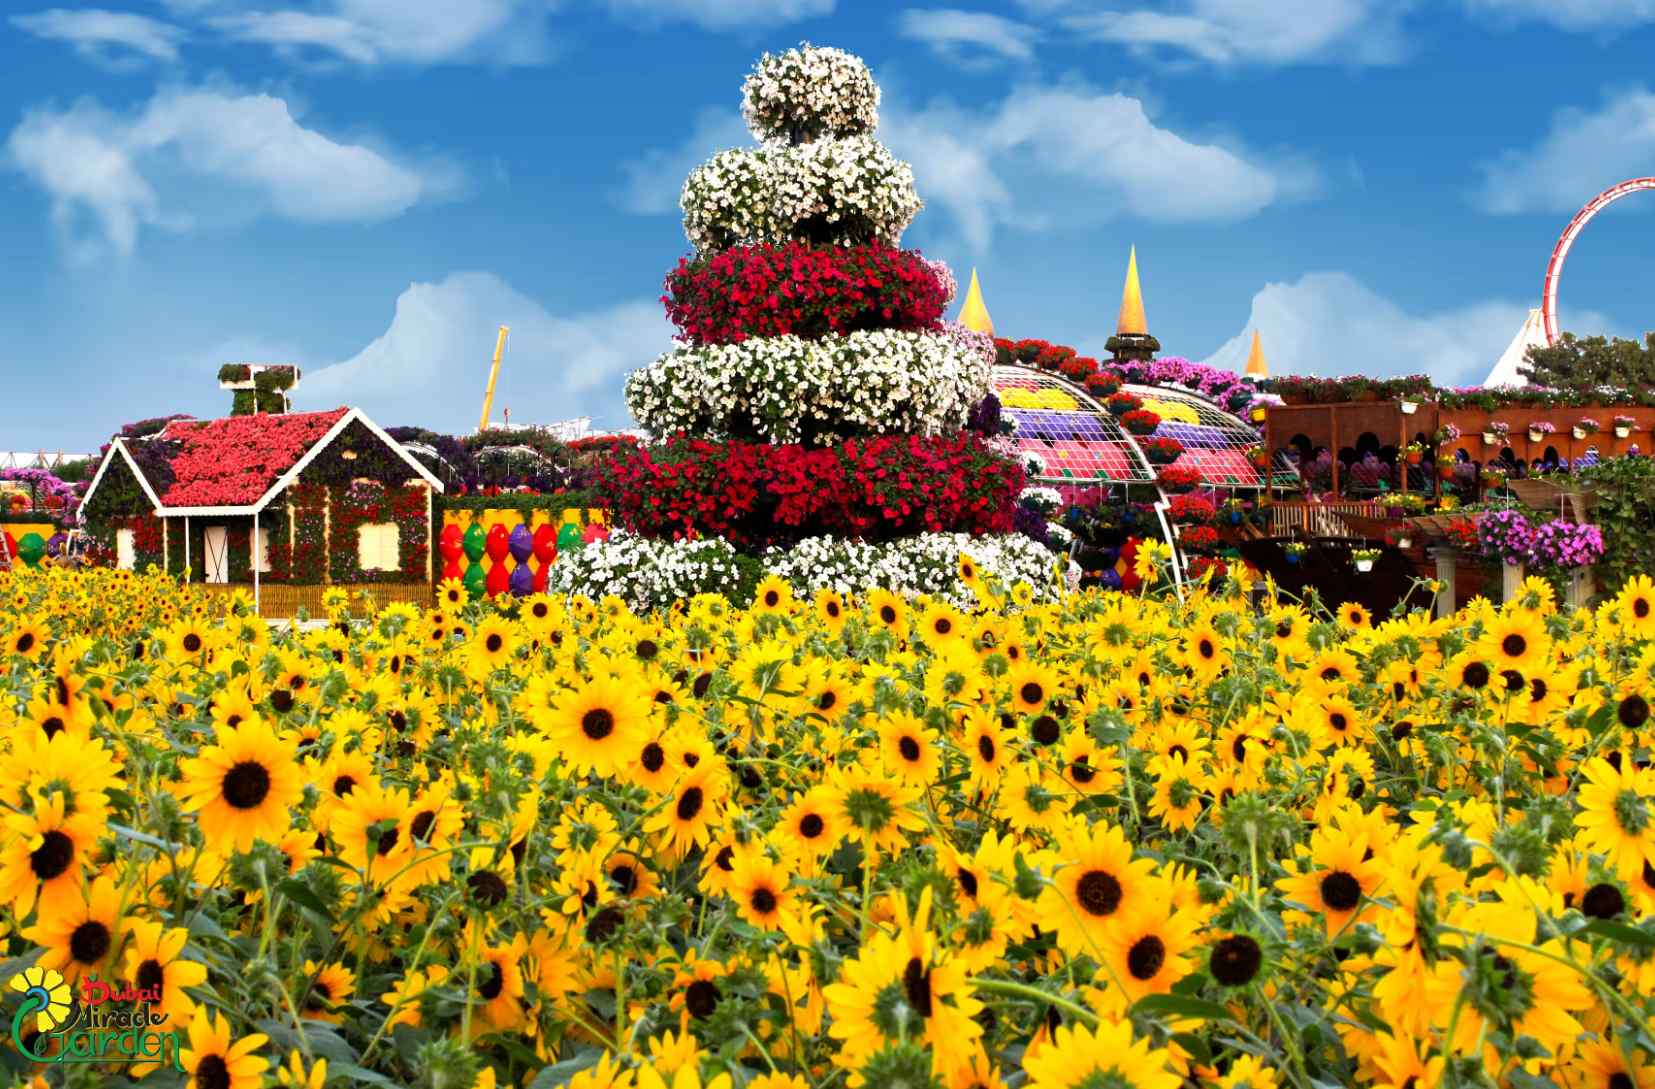 Sunflower Field in Dubai Miracle Garden Street 3 dubai united arab emirates